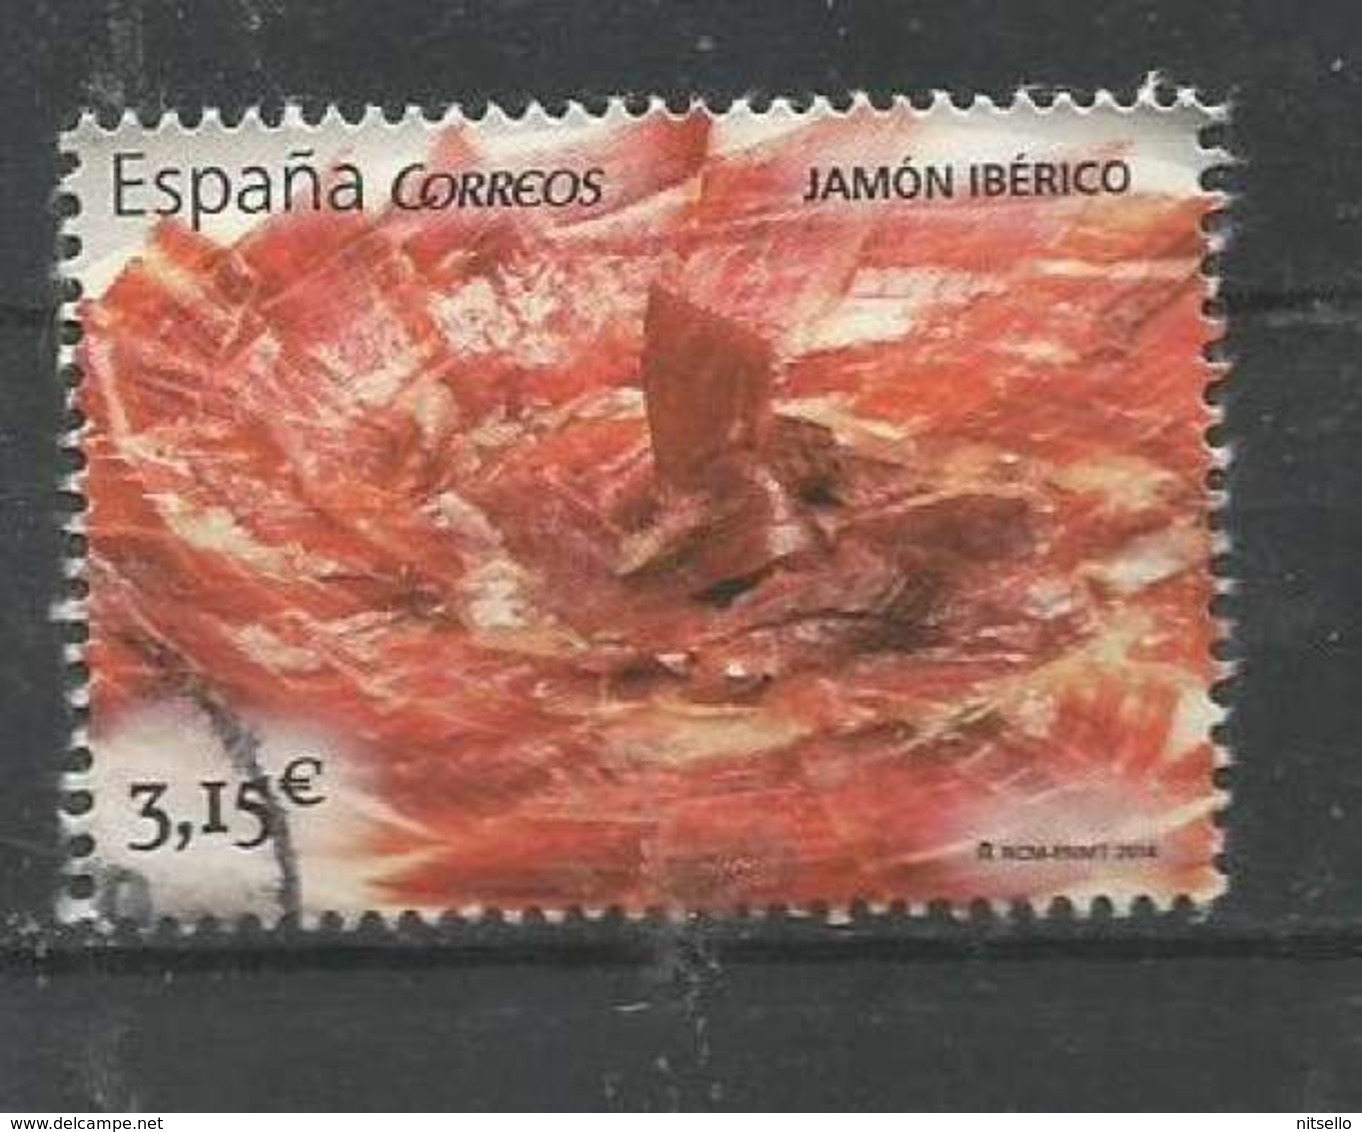 LOTE 2064 ///  (C240) ESPAÑA  2014 - YT N° 4585 JAMON IBERICO  ¡¡¡ OFERTA - LIQUIDATION - JE LIQUIDE !!! - Used Stamps